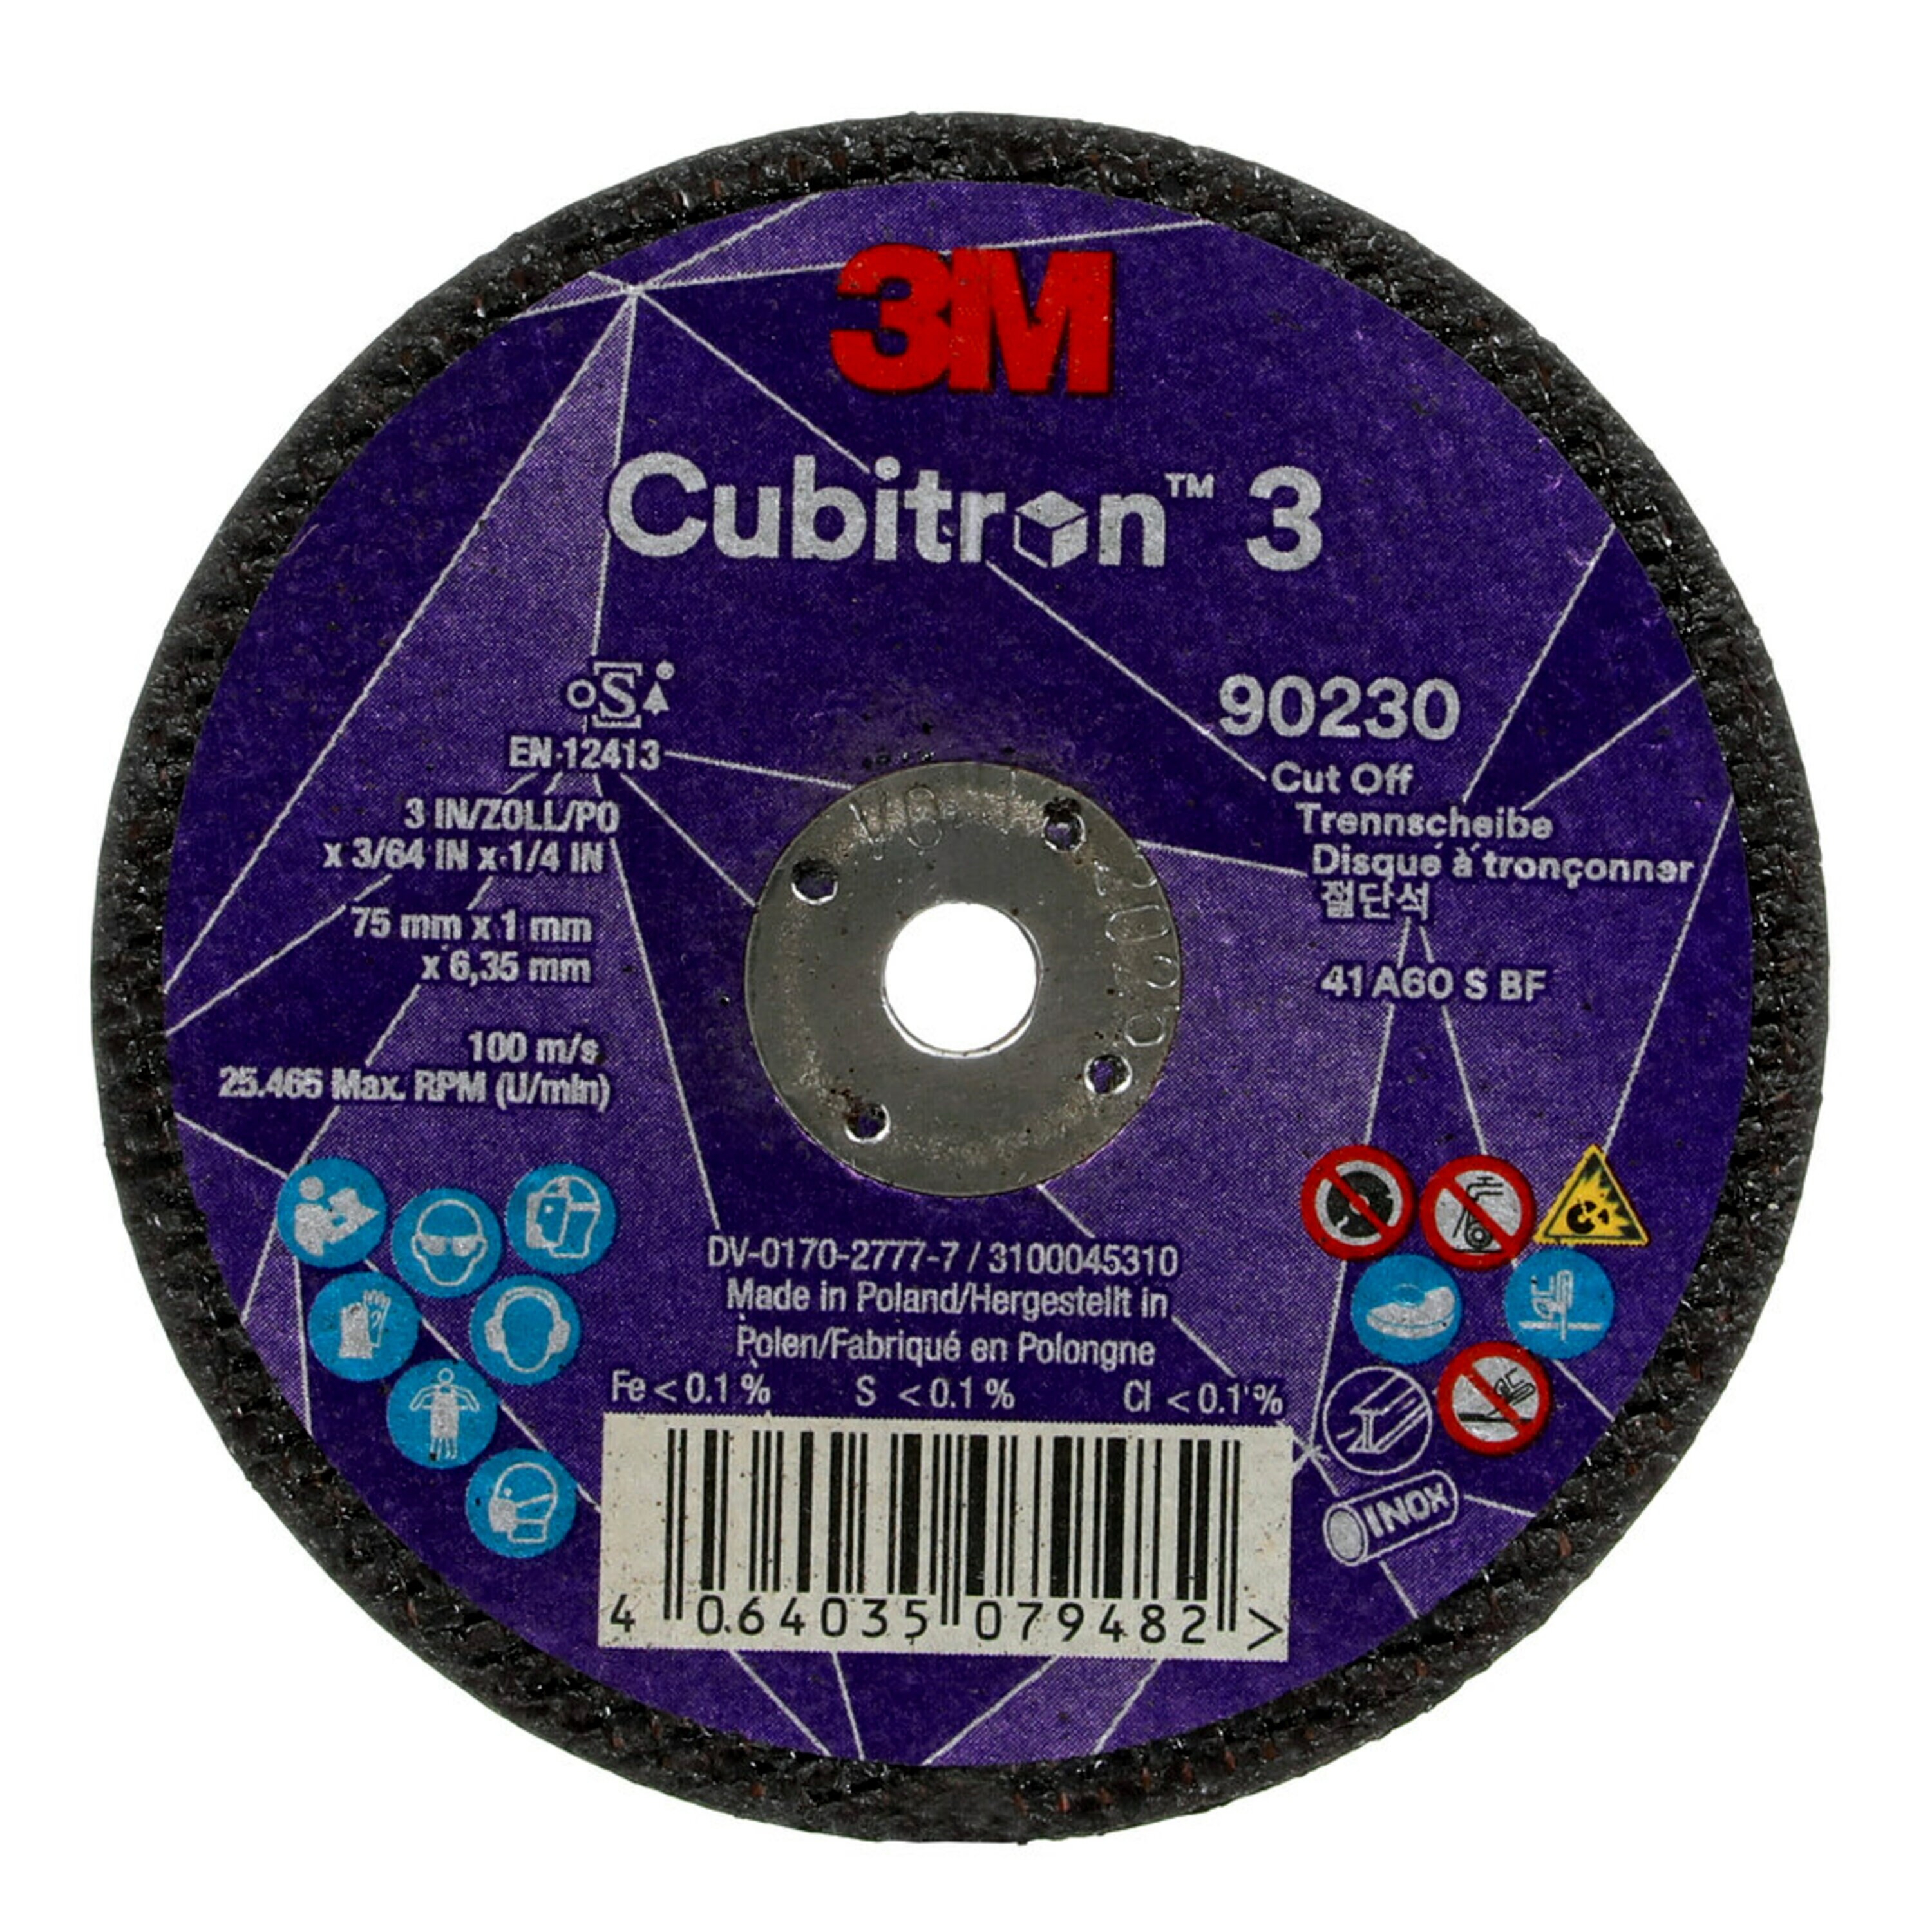 3M Cubitron 3 cut-off wheel, 75 mm, 1 mm, 6.35 mm, 60+, type 41 #90230